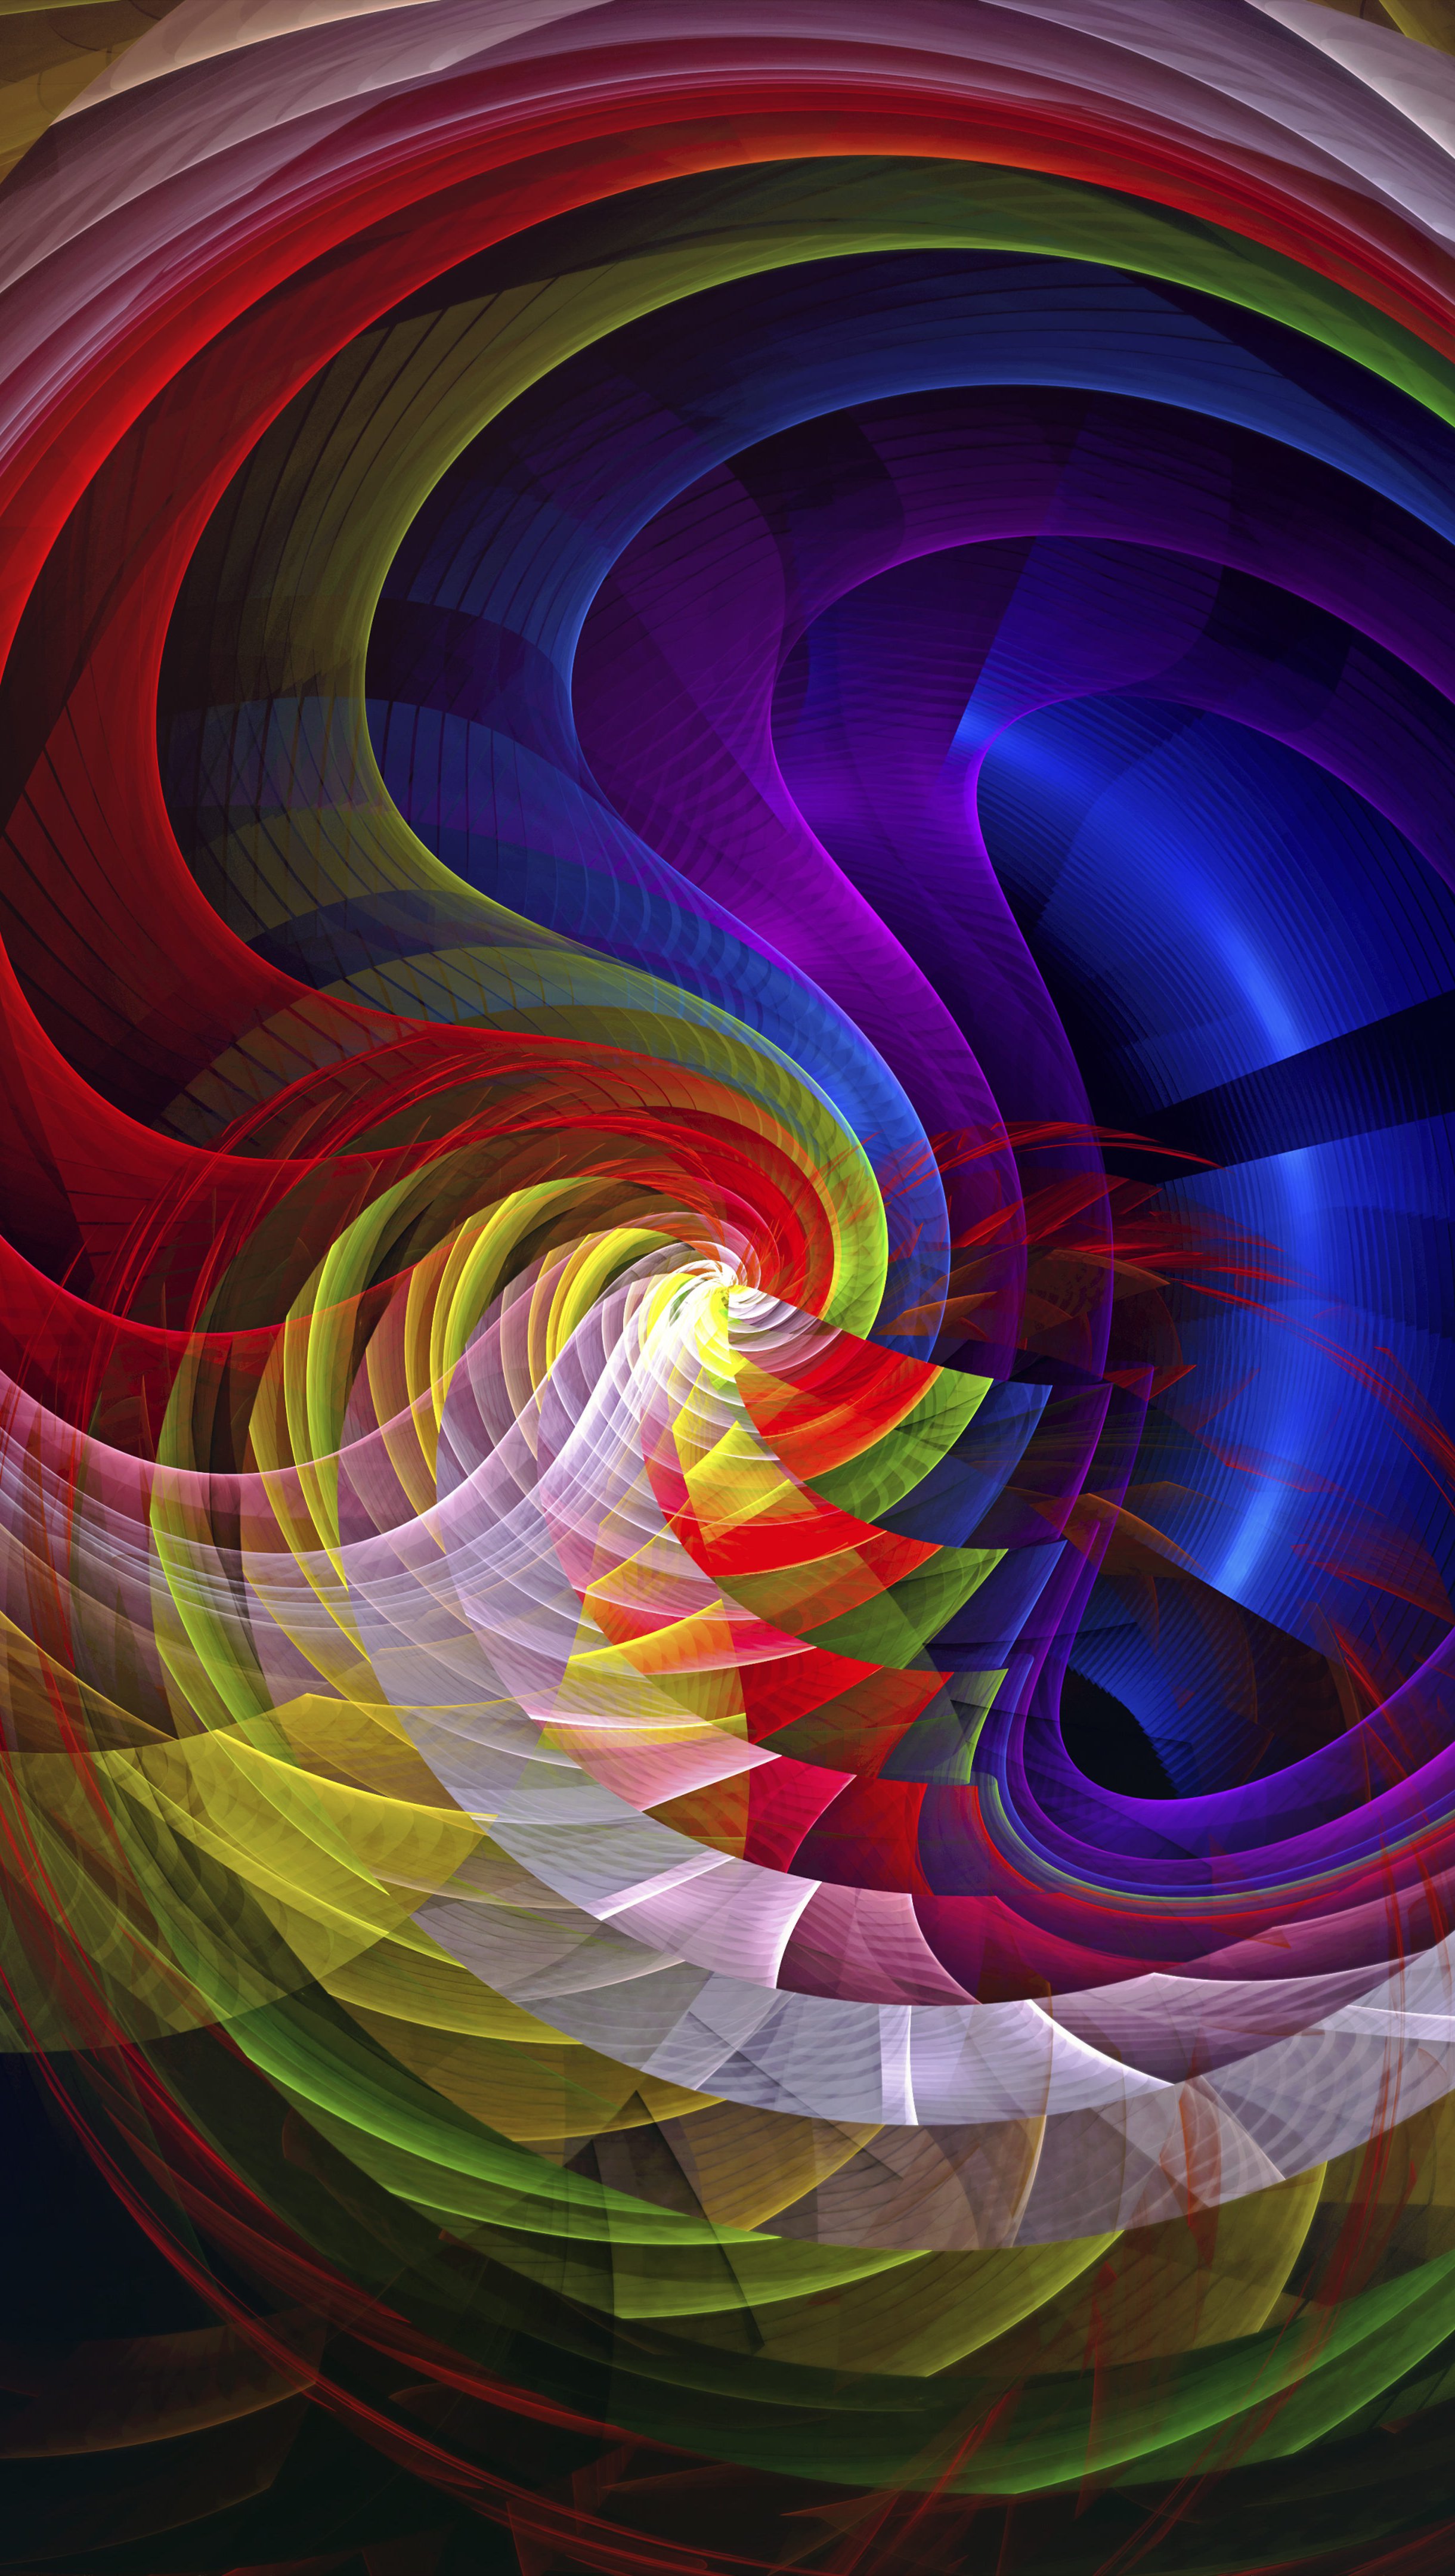 Colorful swirl Digital Art Wallpaper 8k Ultra HD ID:5364